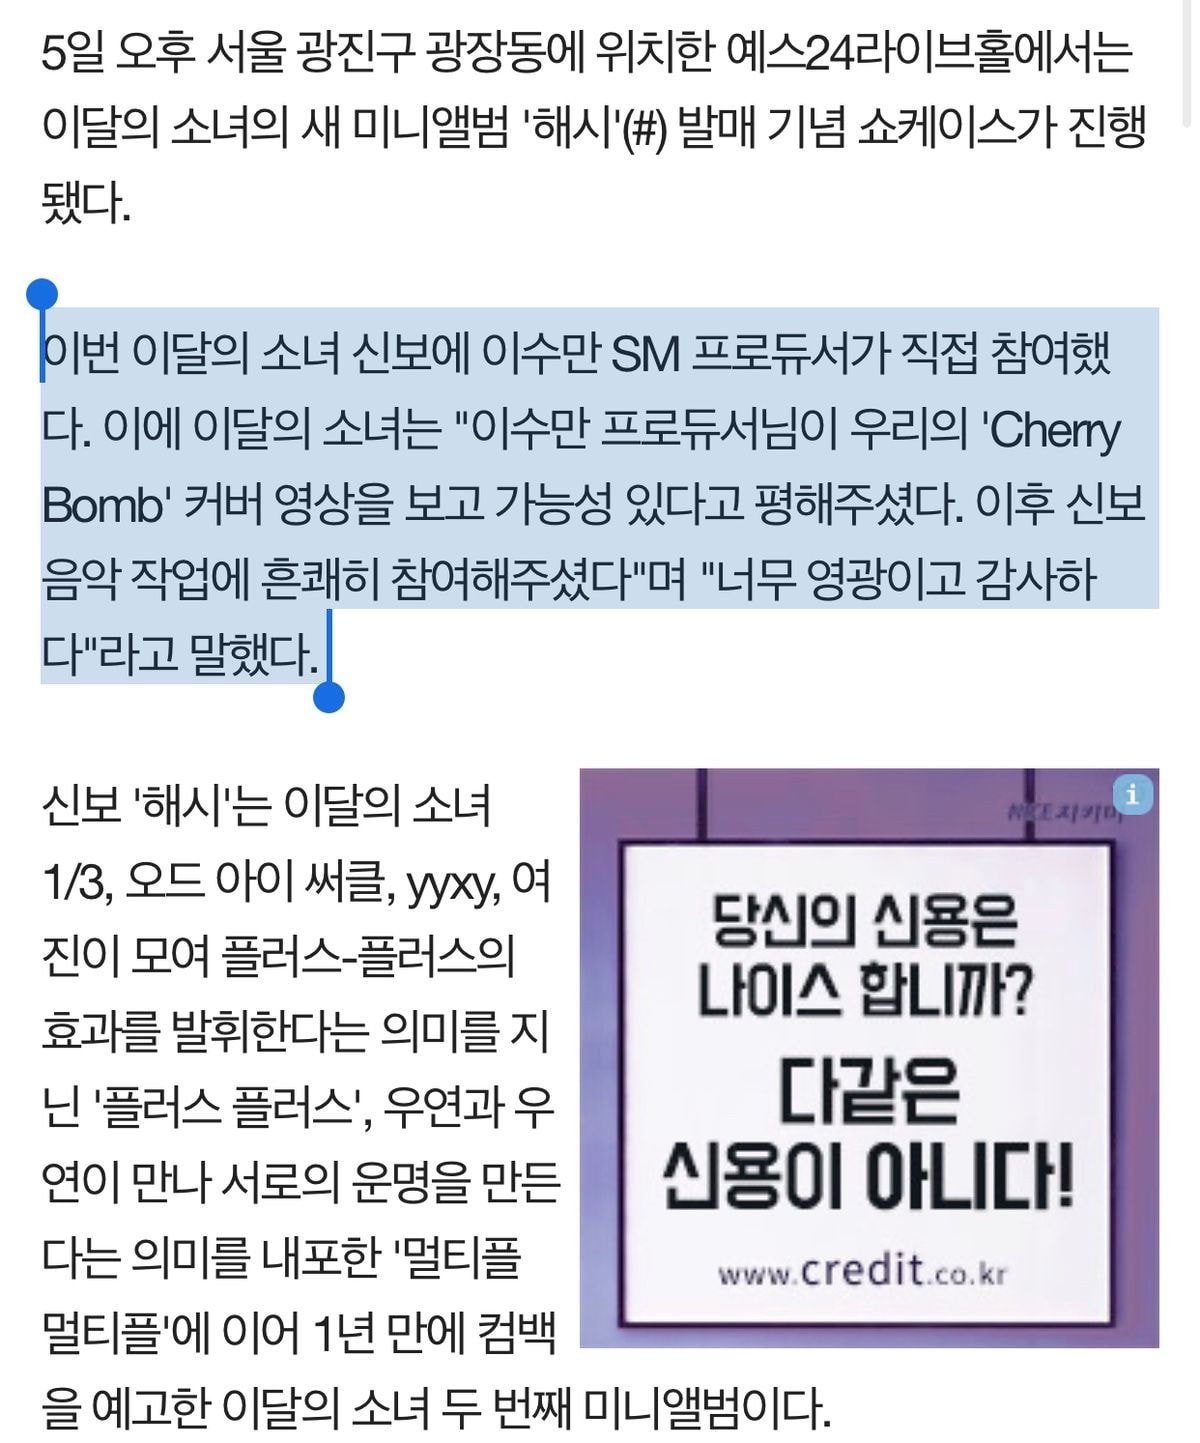 SM 이수만이 #이달의소녀 컴백앨범 프로듀싱한 이유 (Cherry Bomb)